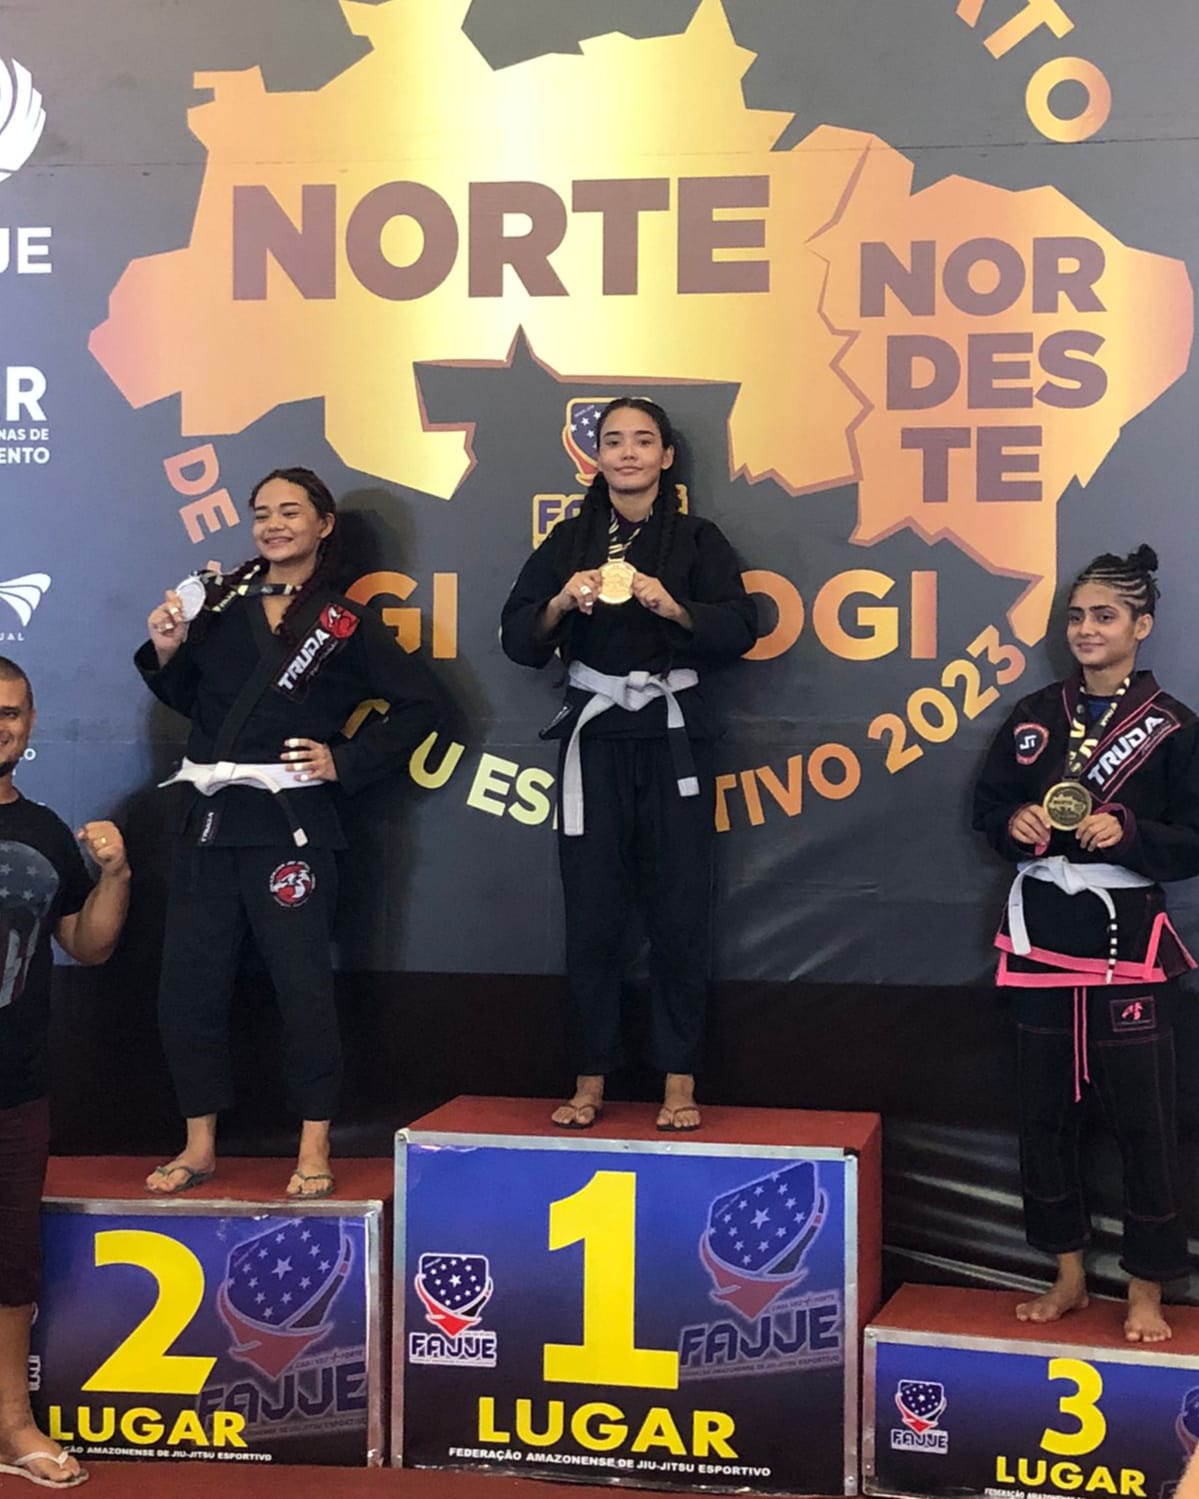 Samille Baraúna wins gold medal in North/Northeast Jiu-Jitsu